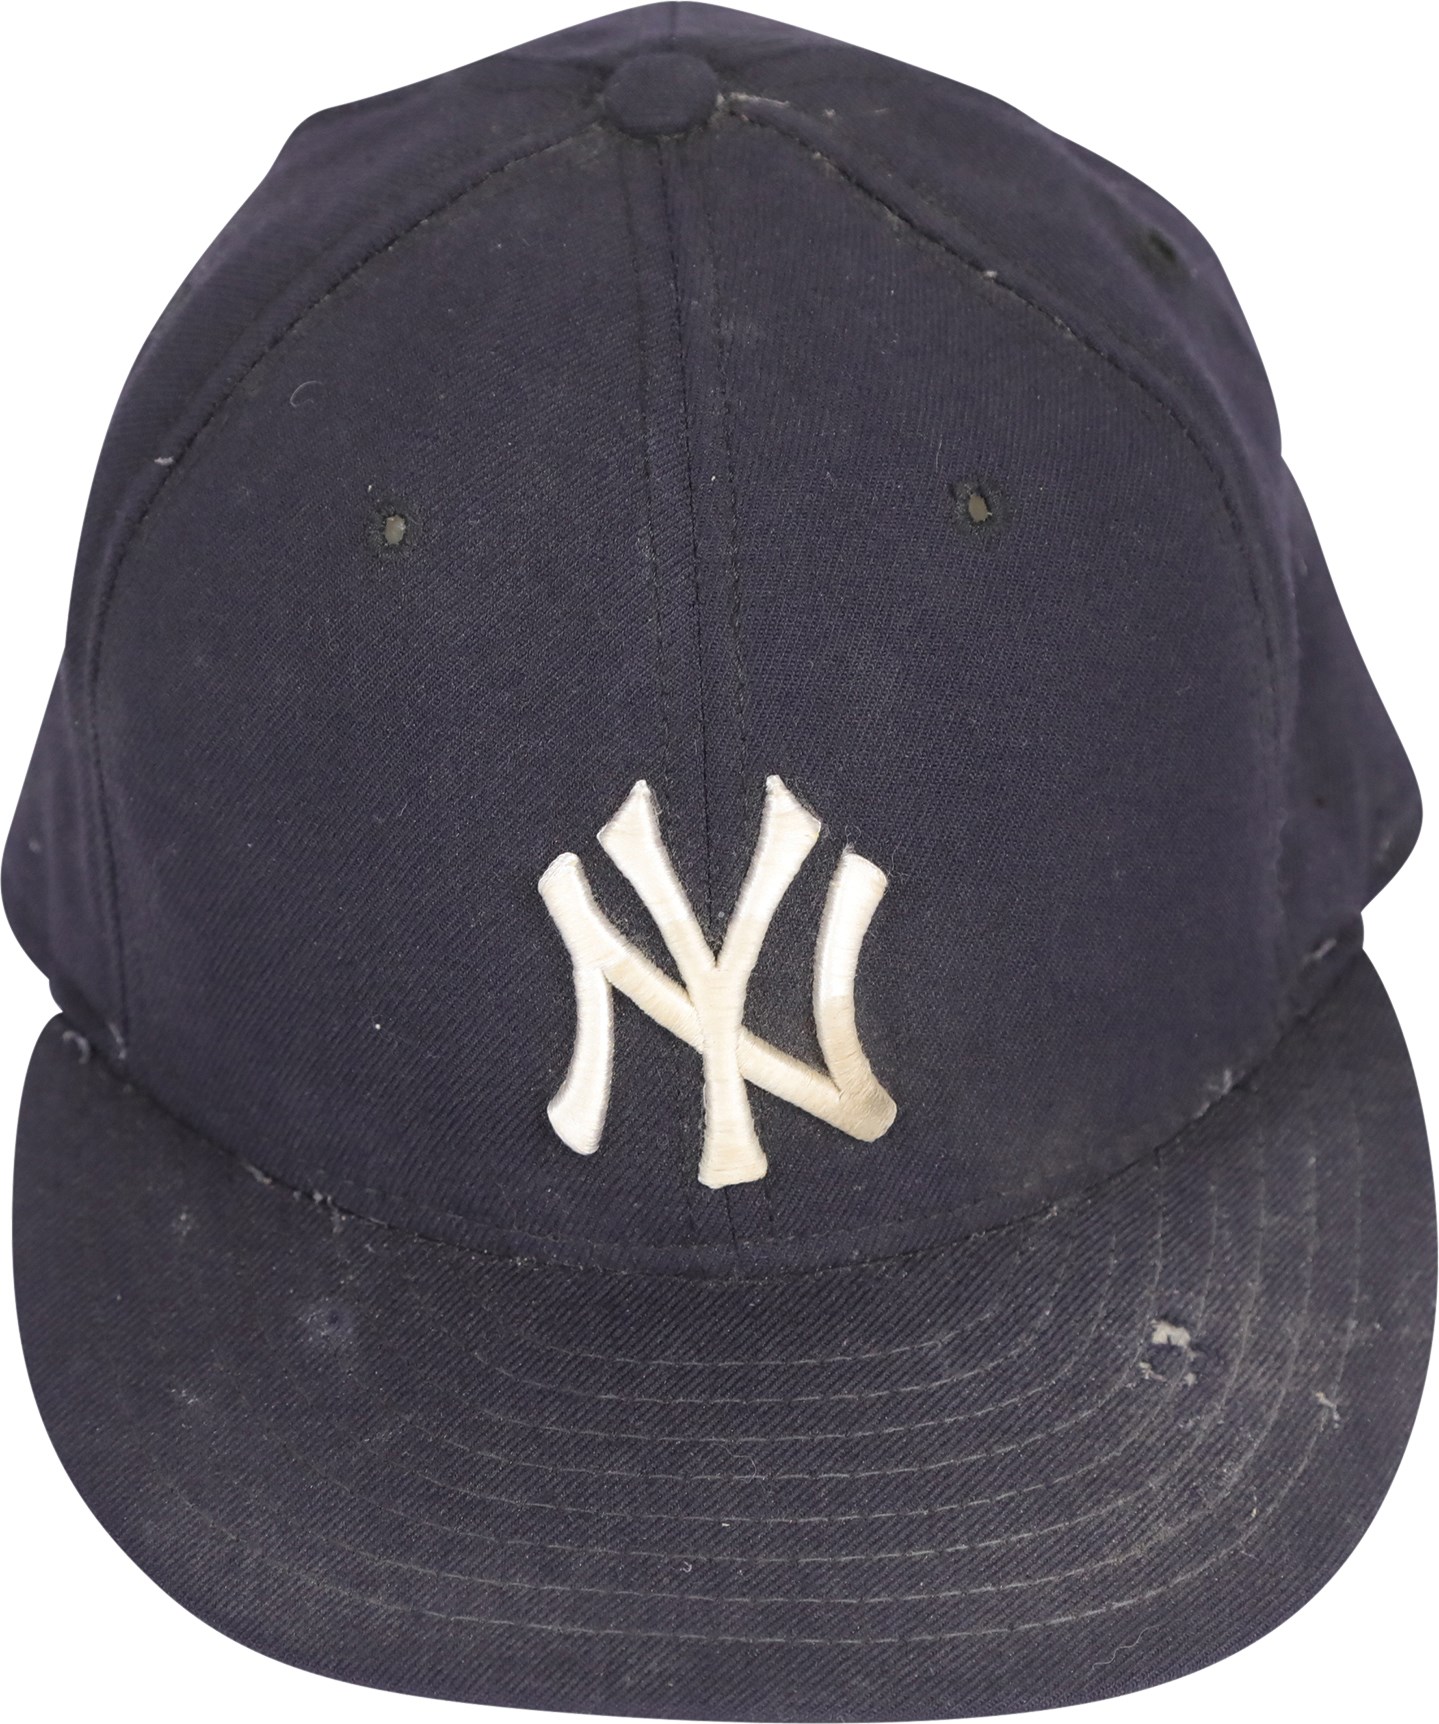 - 1996 Wade Boggs New York Yankees Game Used Hat